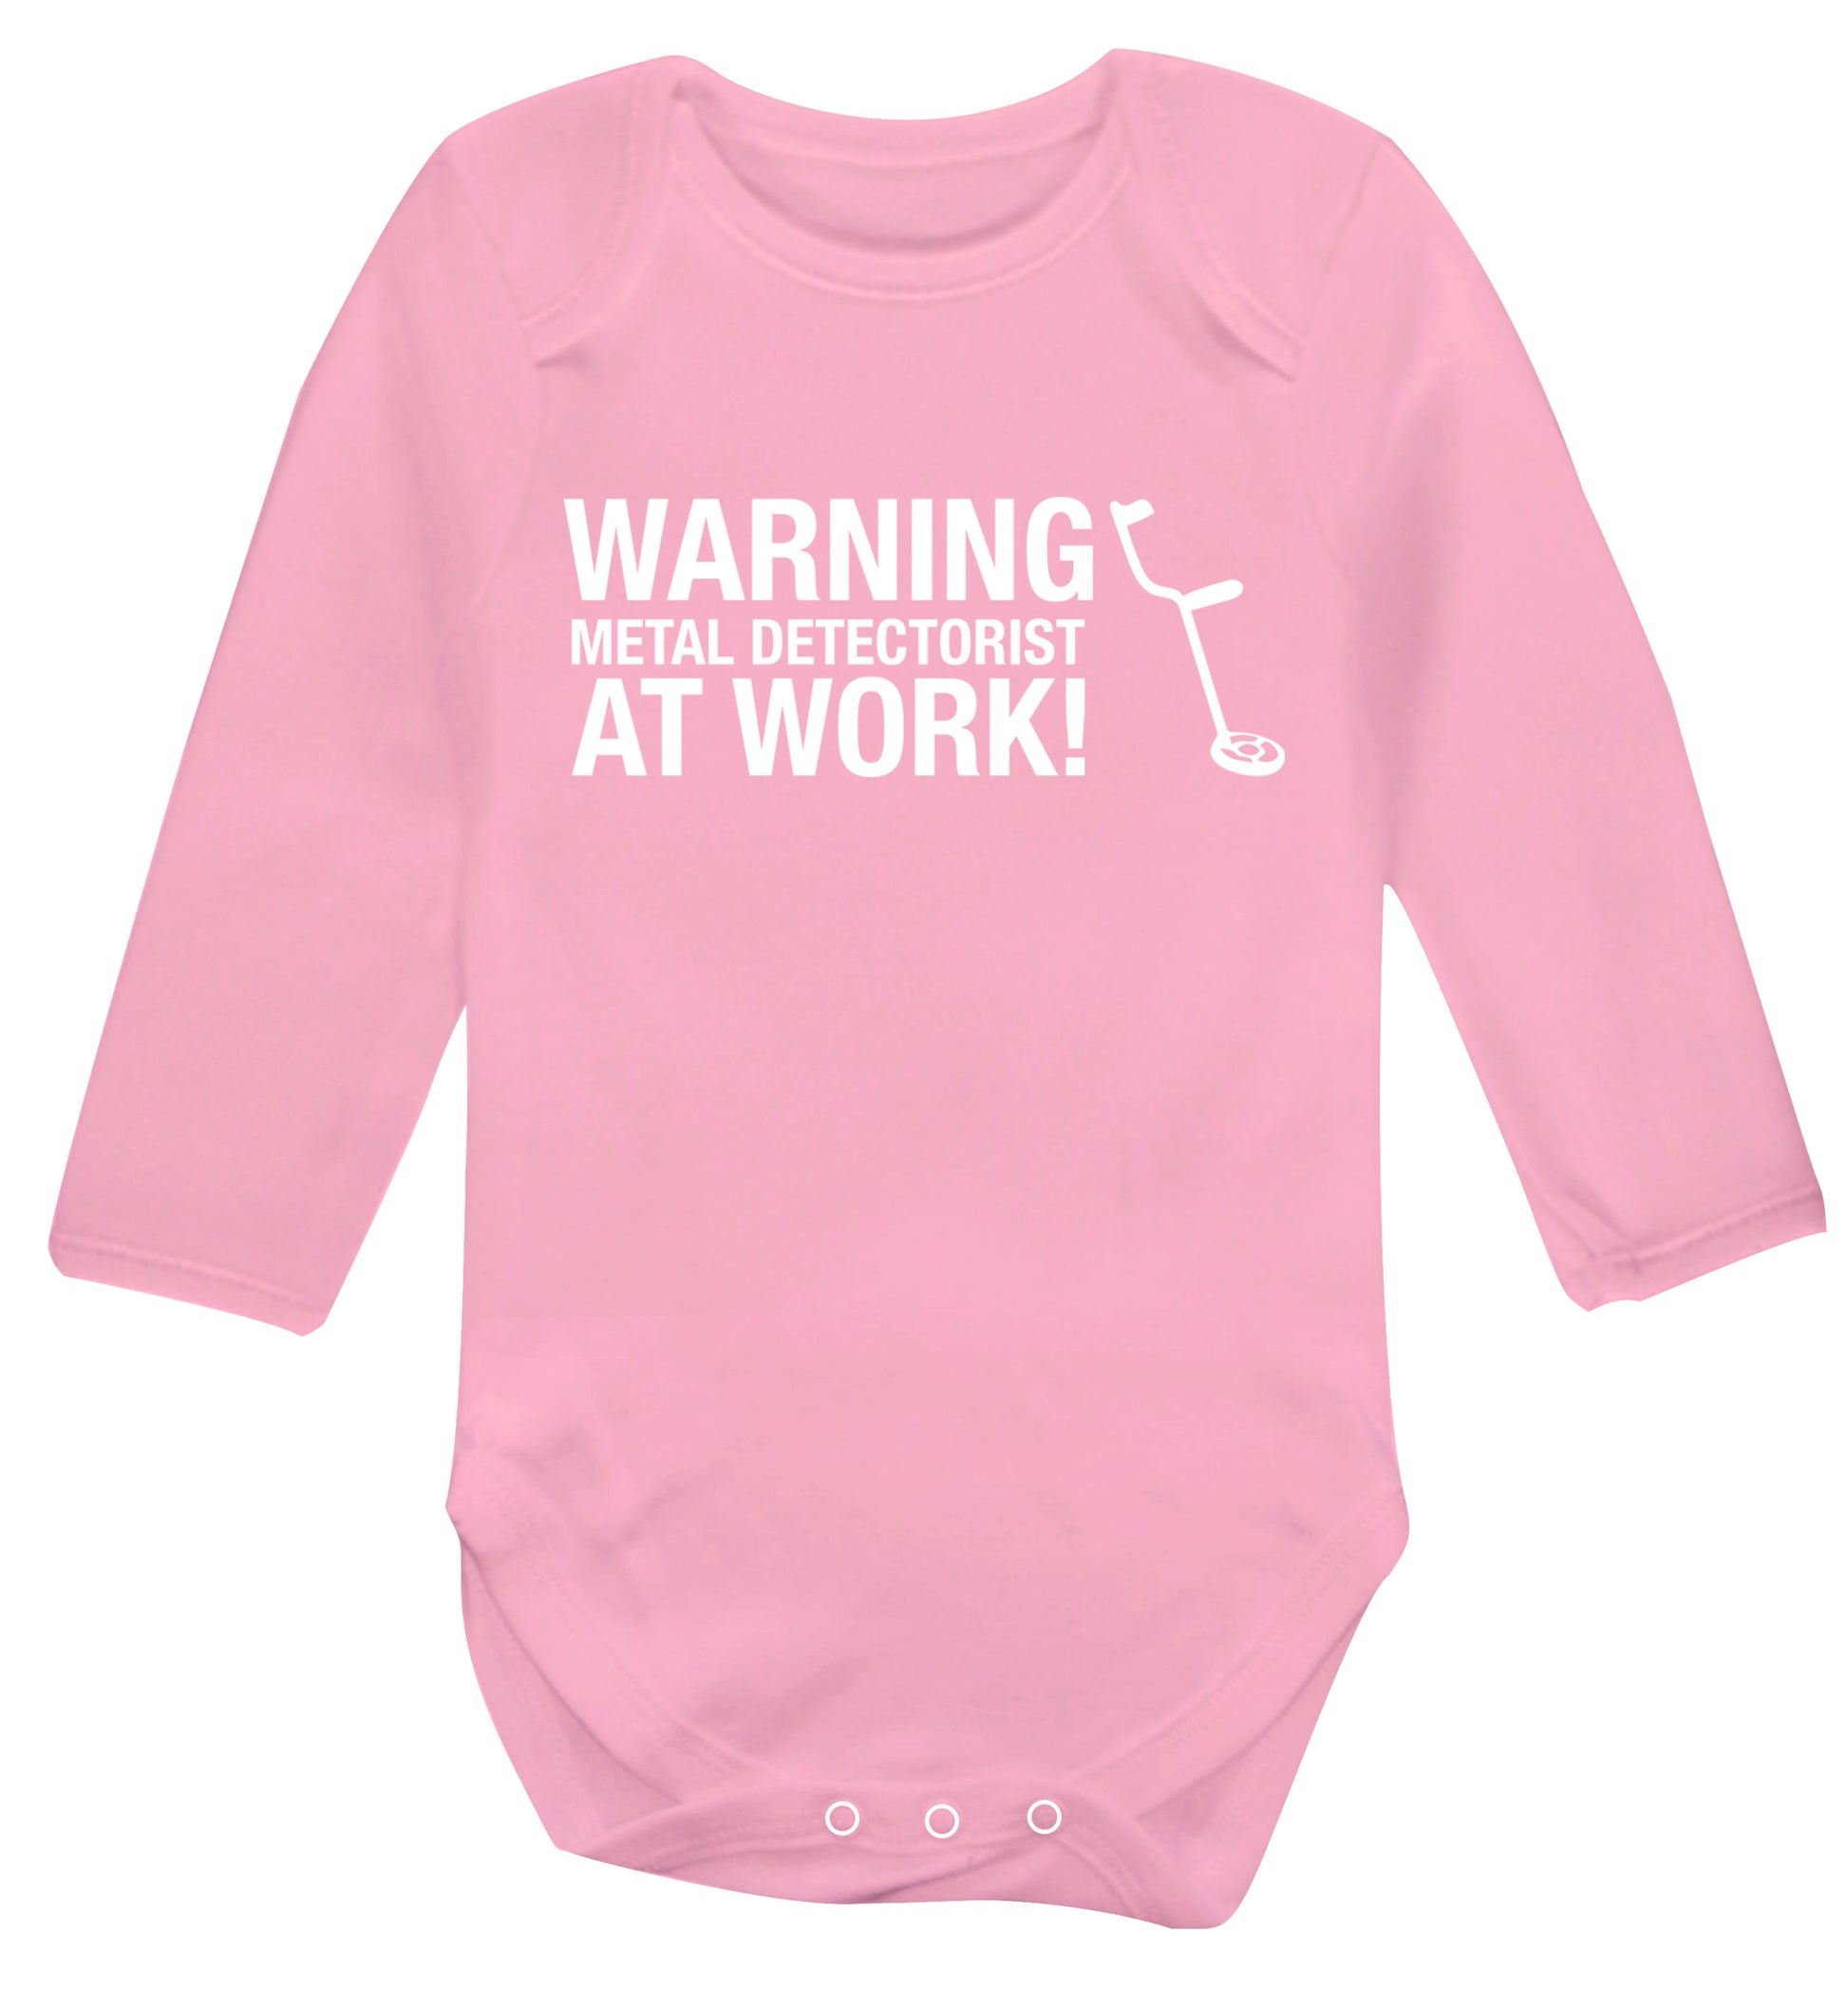 Warning metal detectorist at work! Baby Vest long sleeved pale pink 6-12 months